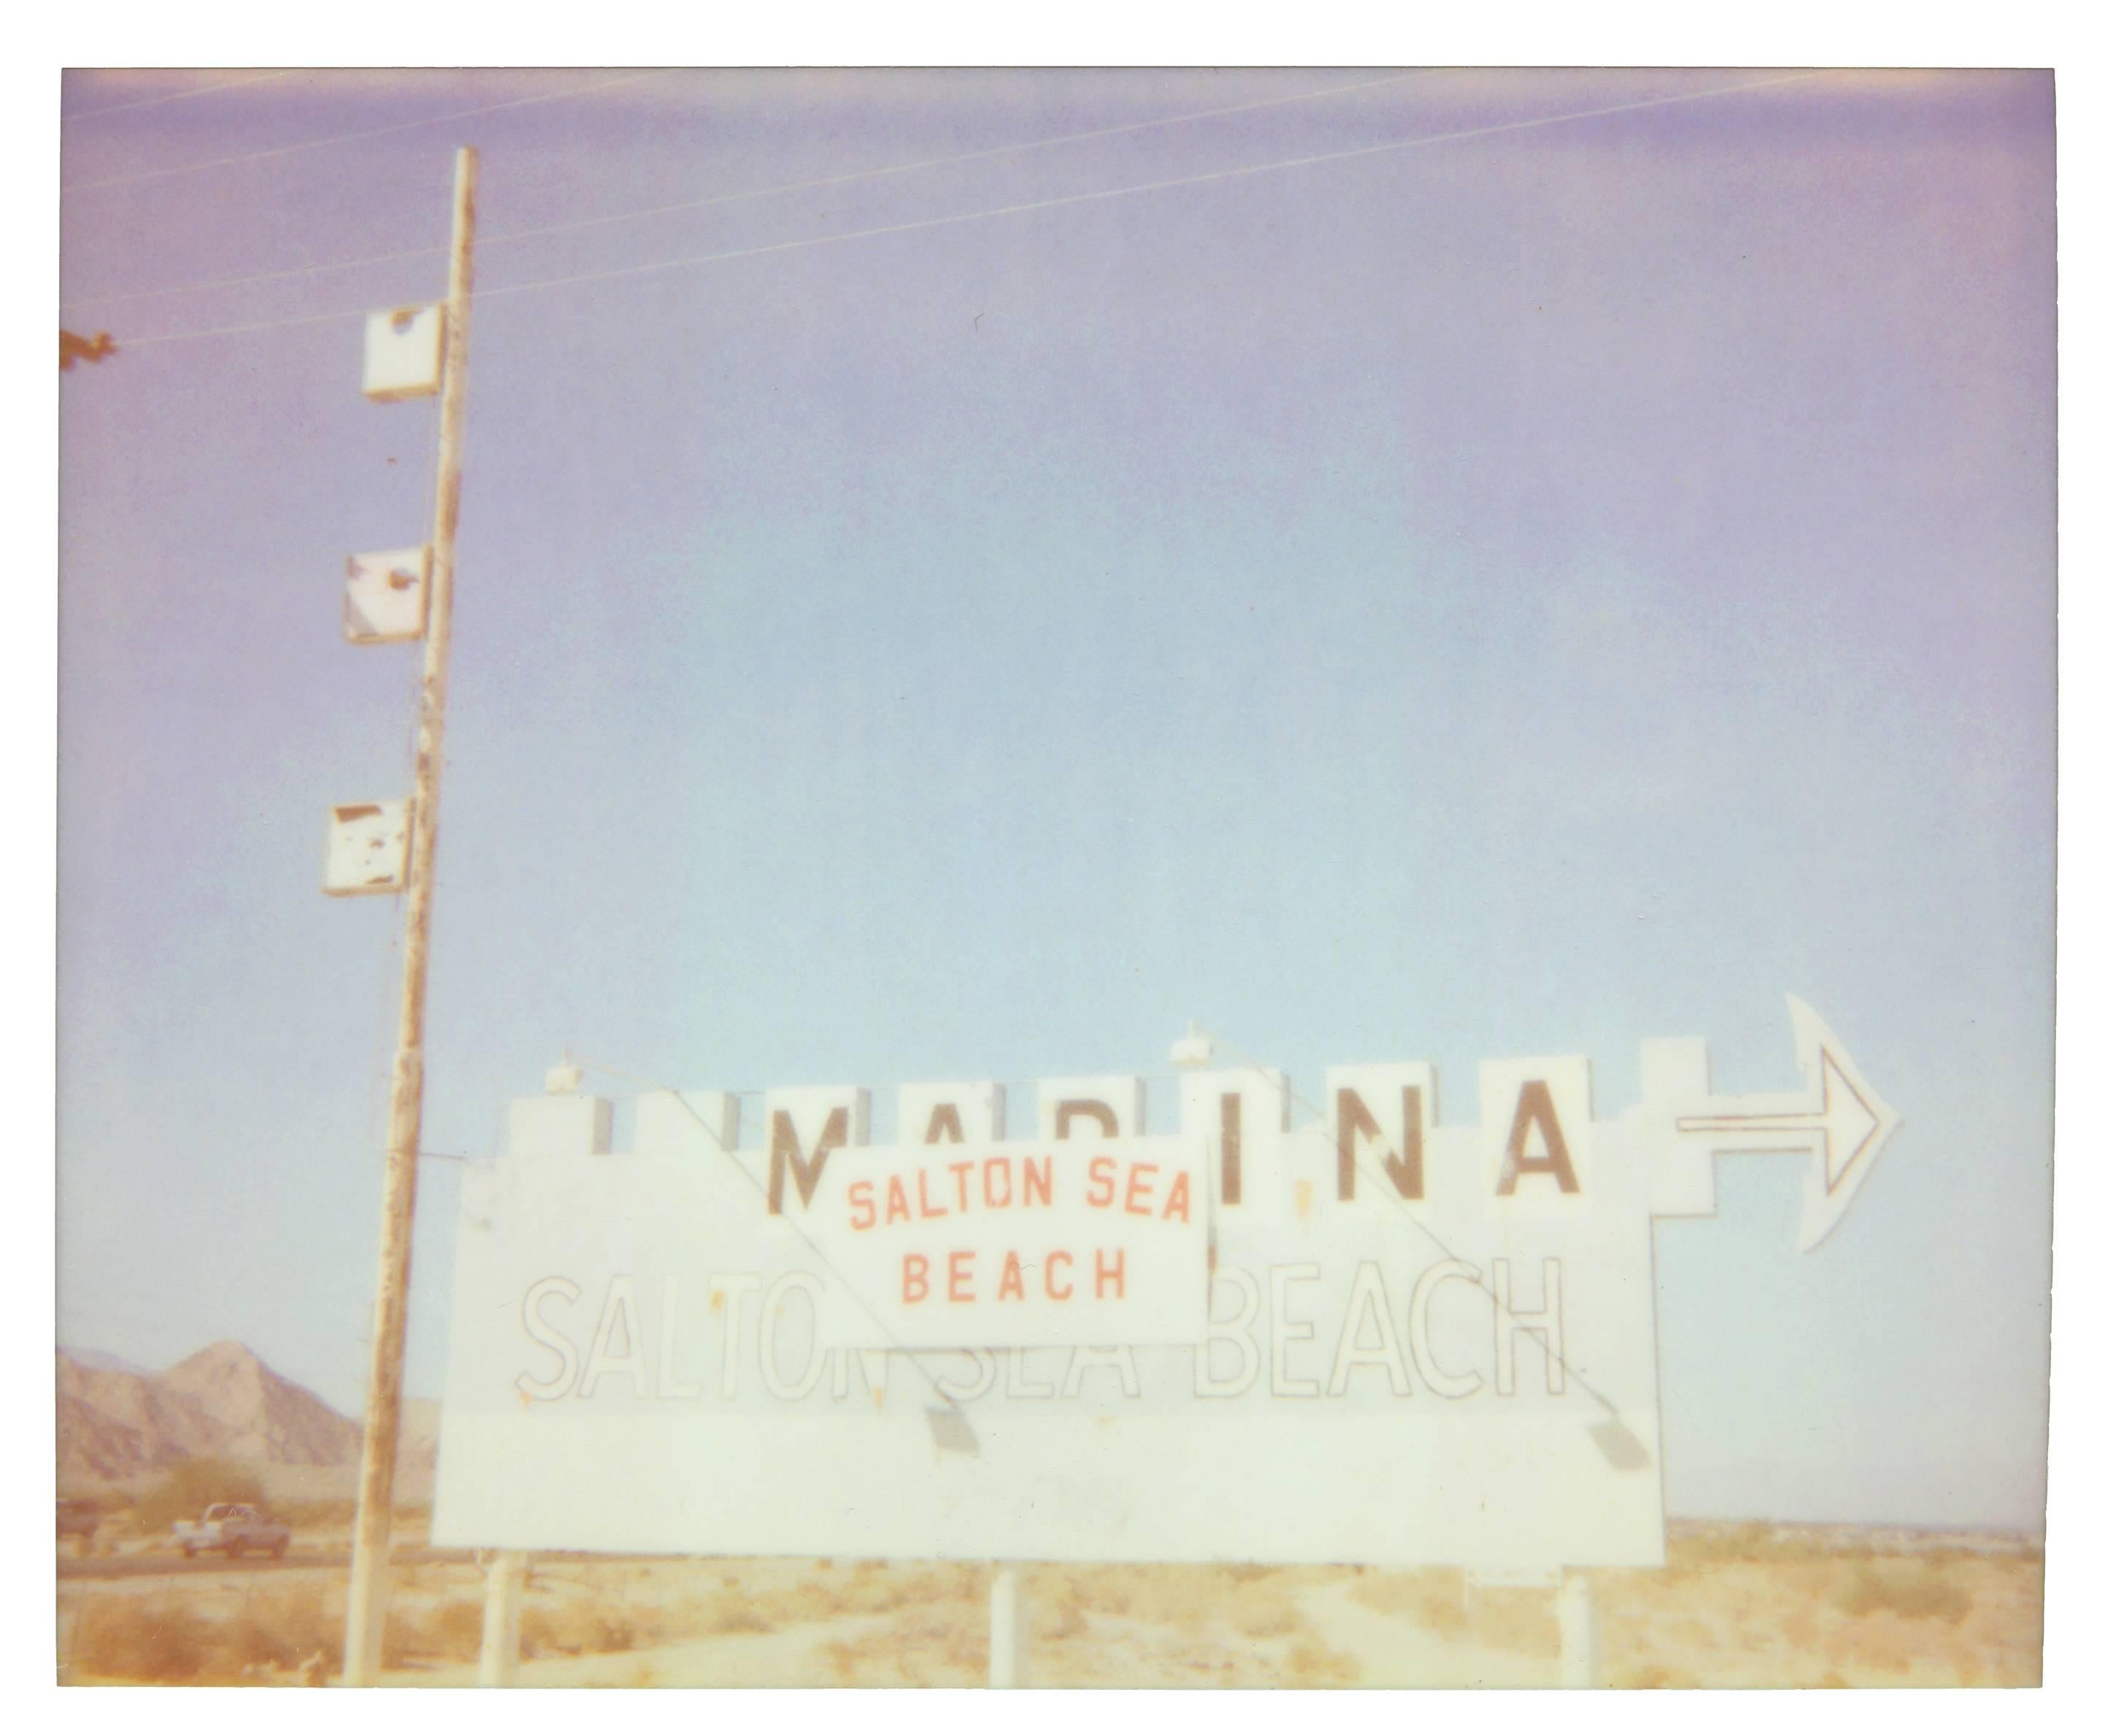 Stefanie Schneider Landscape Photograph - Salton Sea Marina (California Badlands) - Polaroid, Landscape, Contemporary